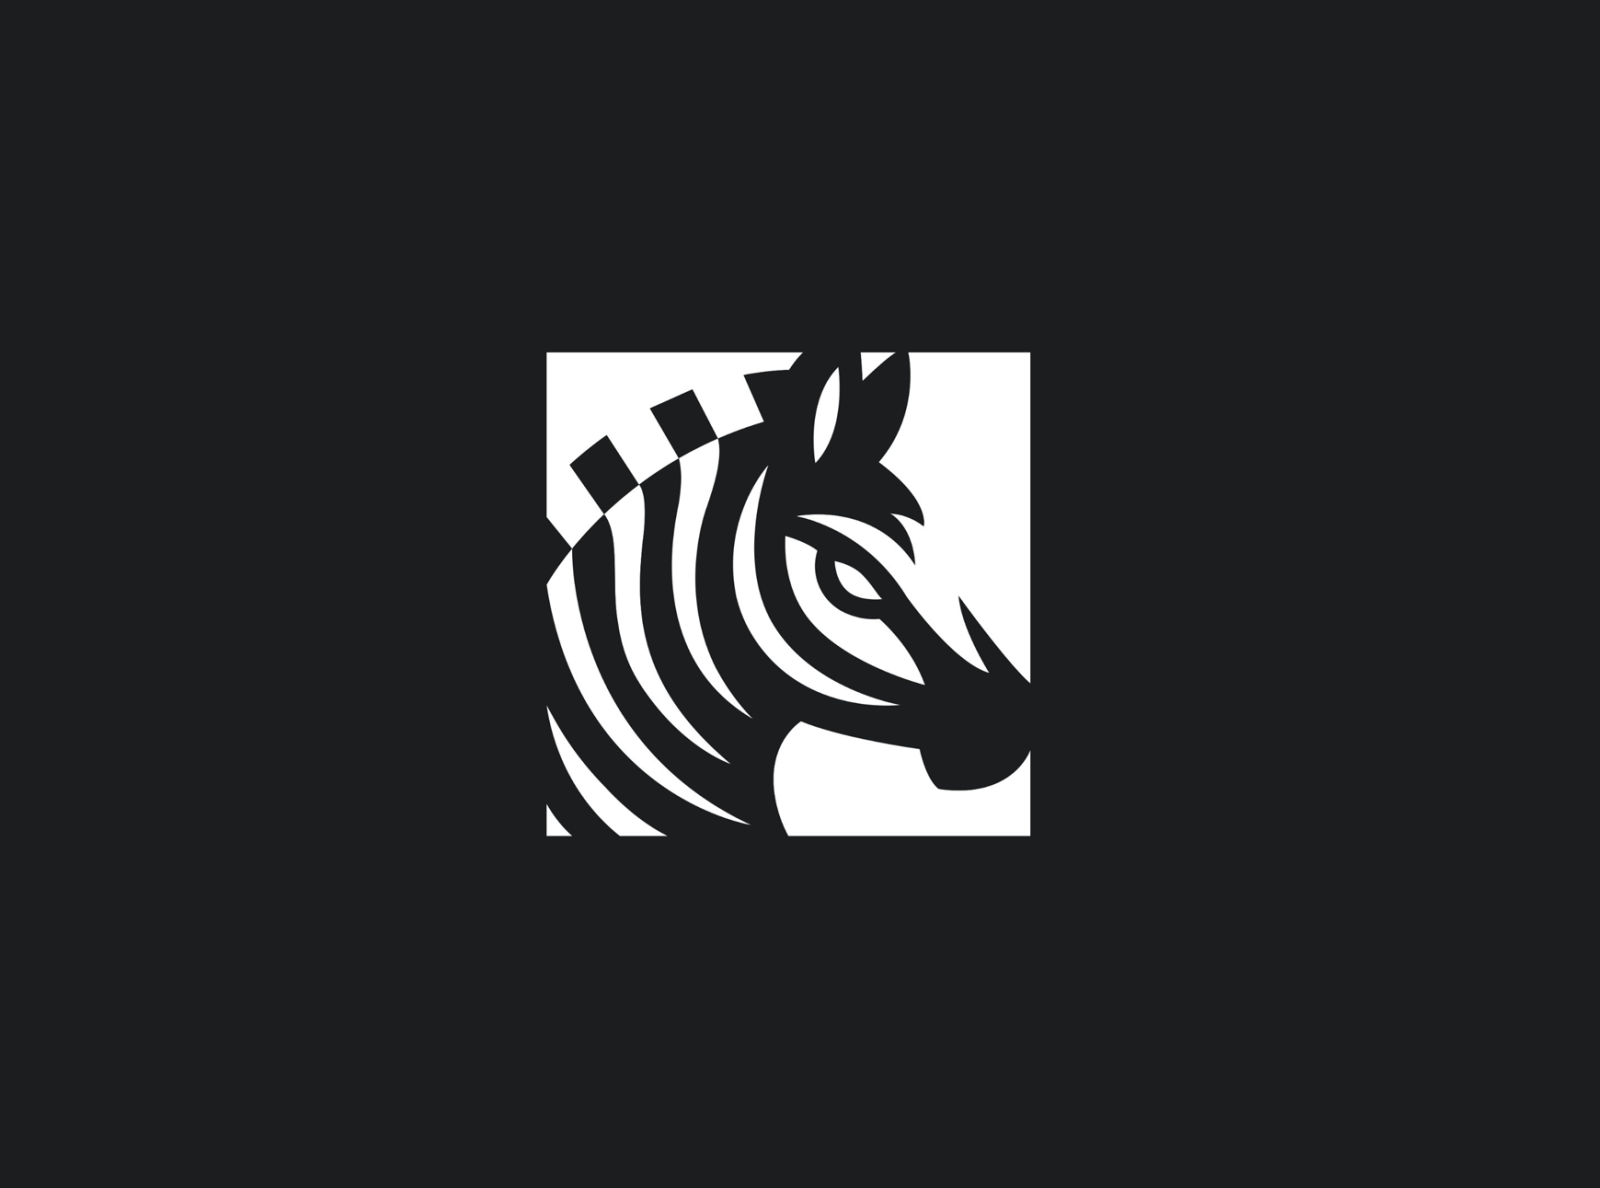 Zebra Logos - 43+ Best Zebra Logo Ideas. Free Zebra Logo Maker. | 99designs